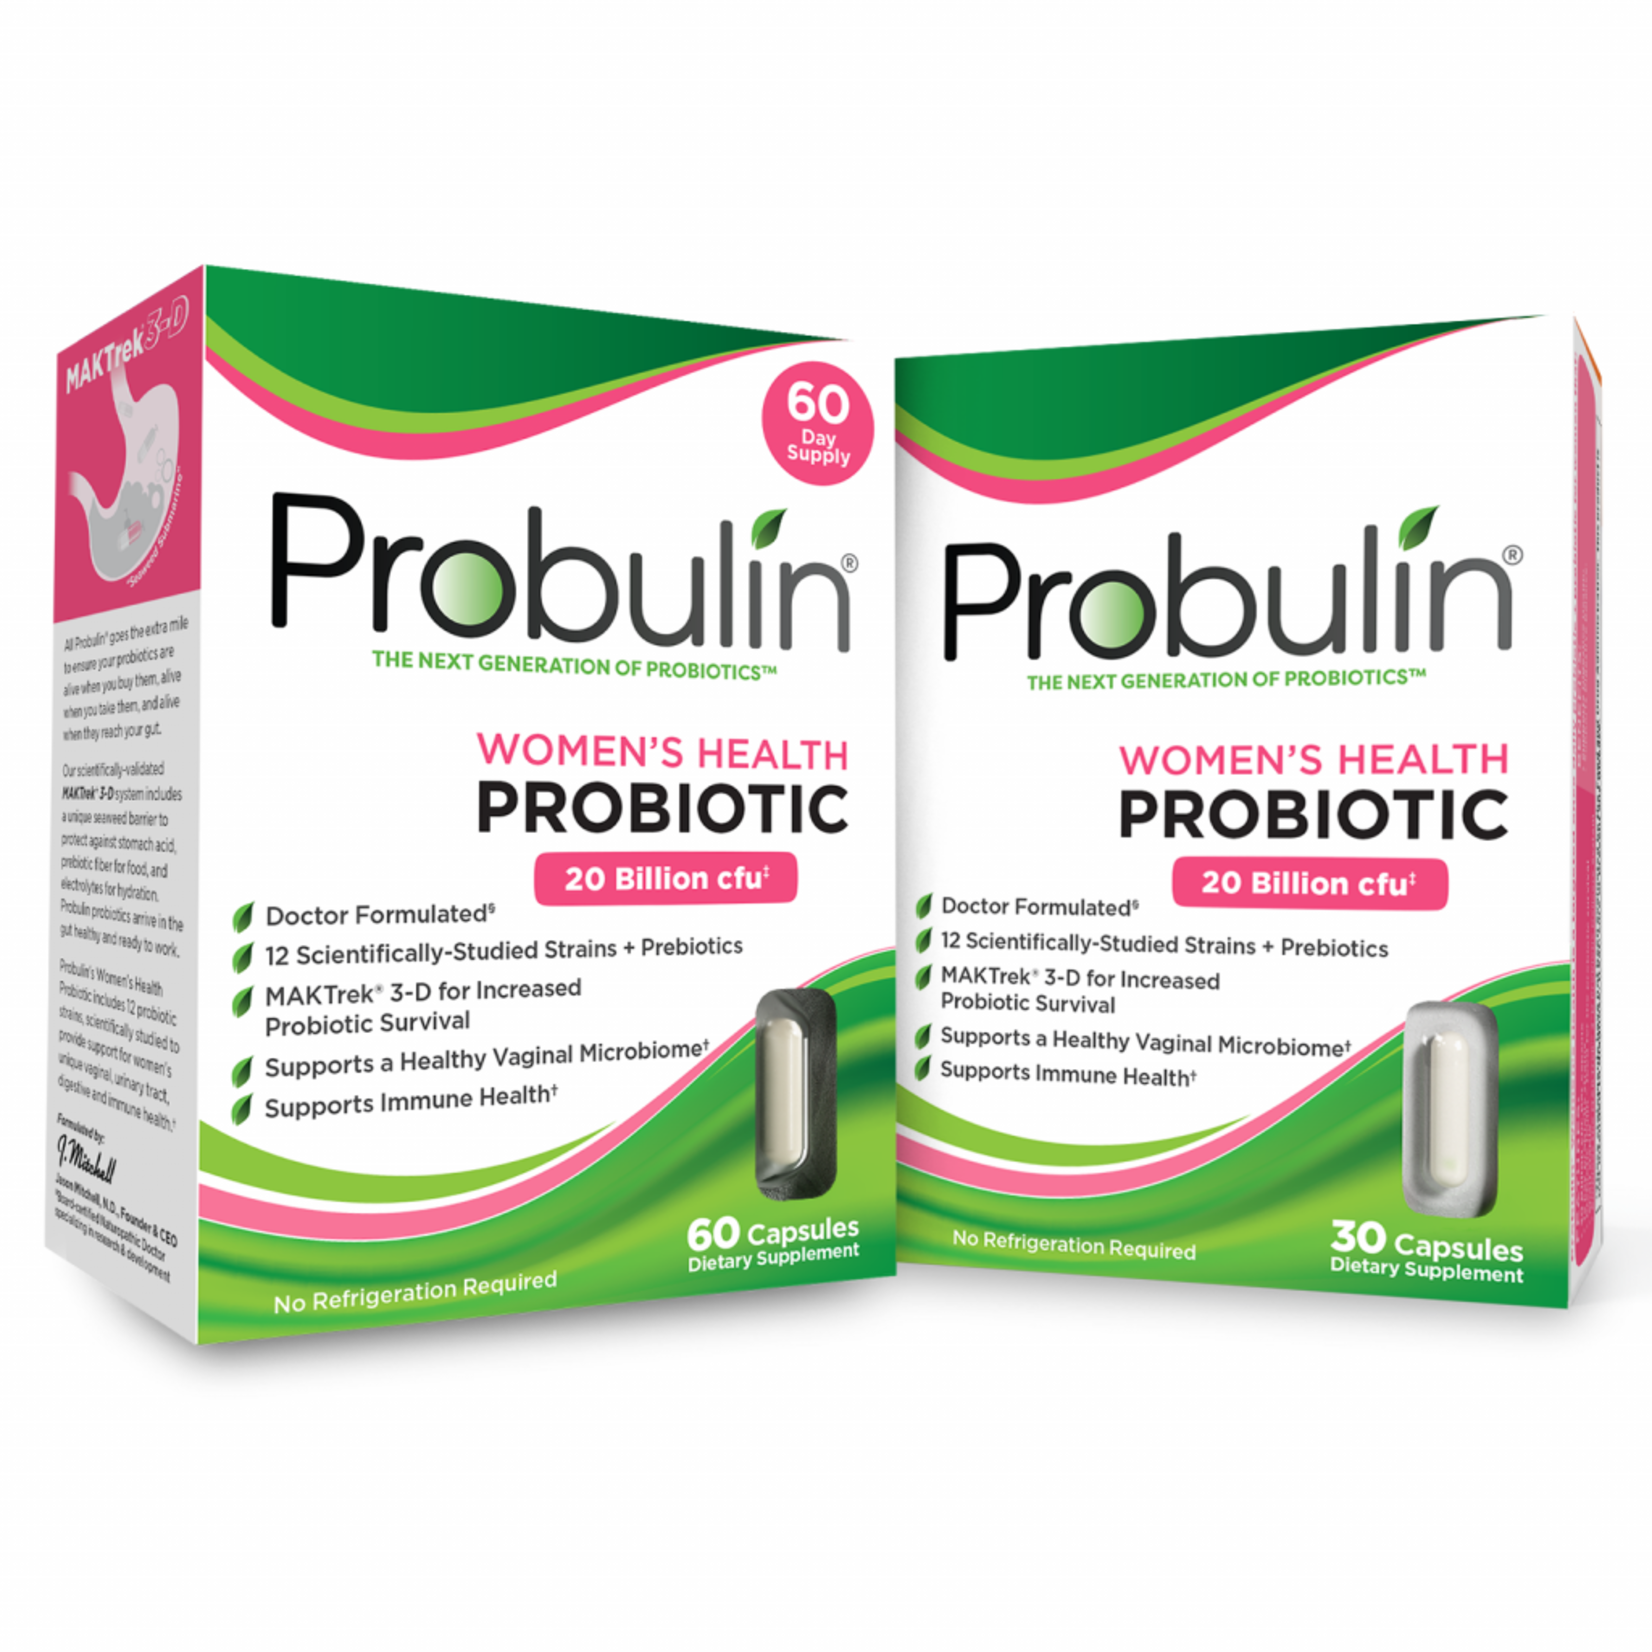 Probulin Probulin - Women's Health Probiotic - 30 Capsules